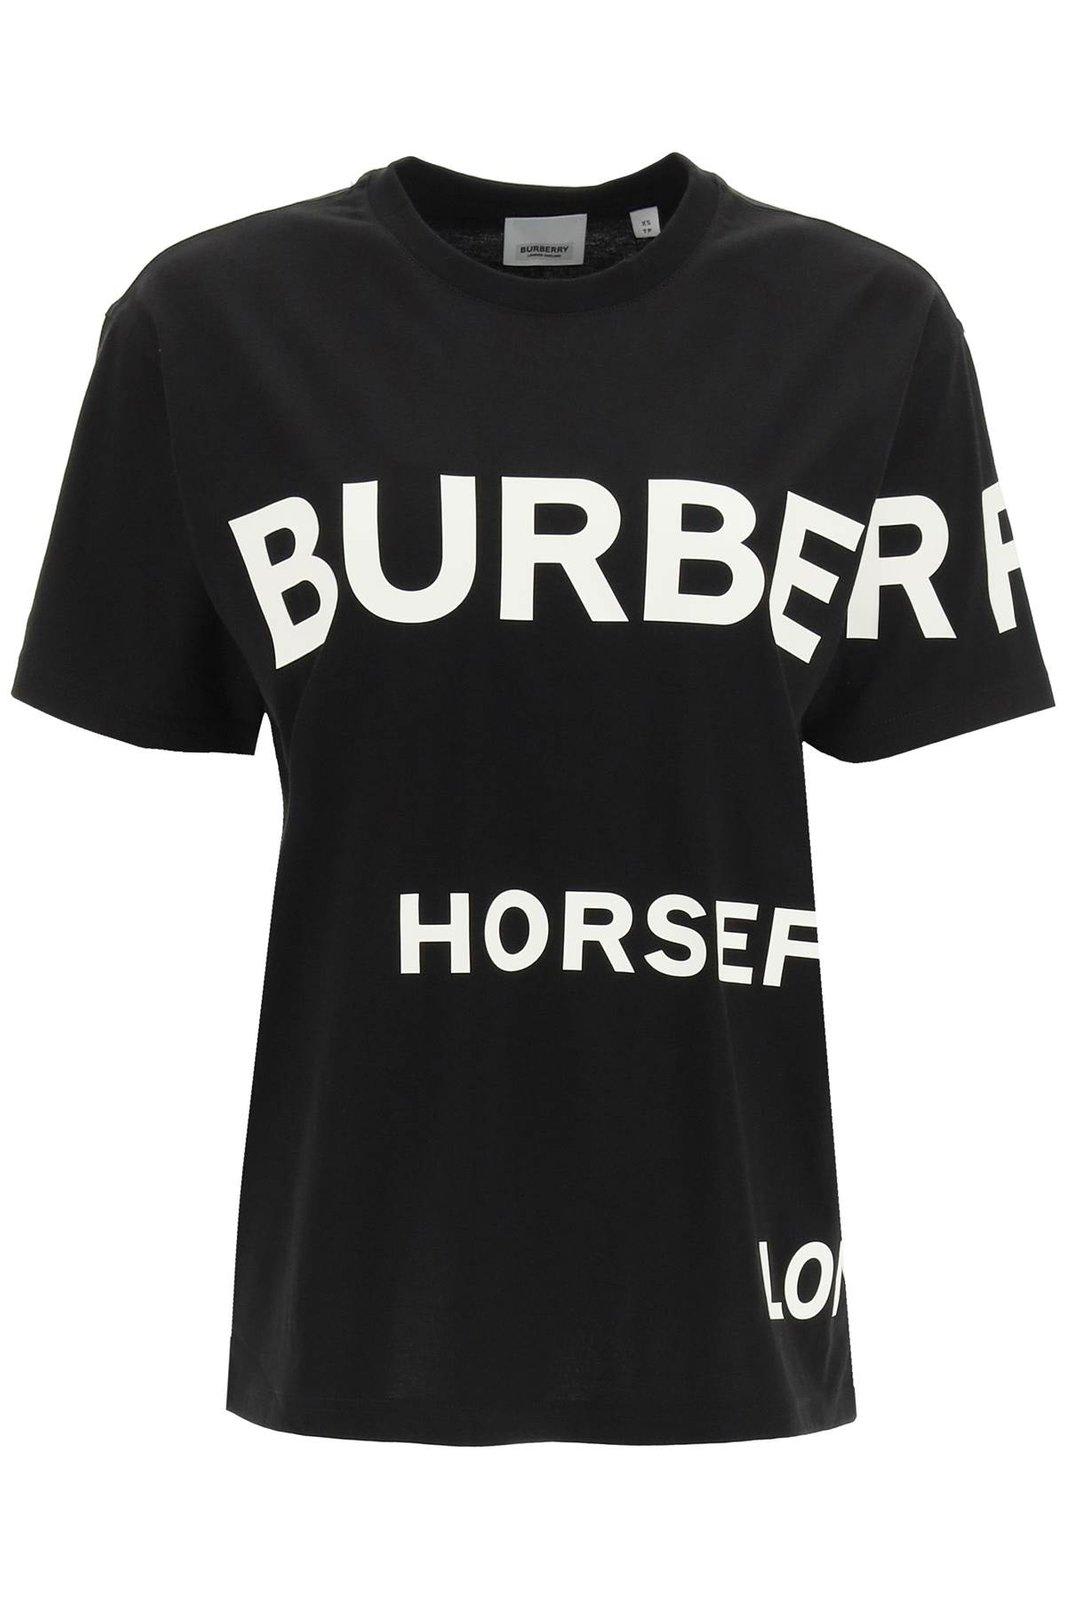 burberry shirts for men black